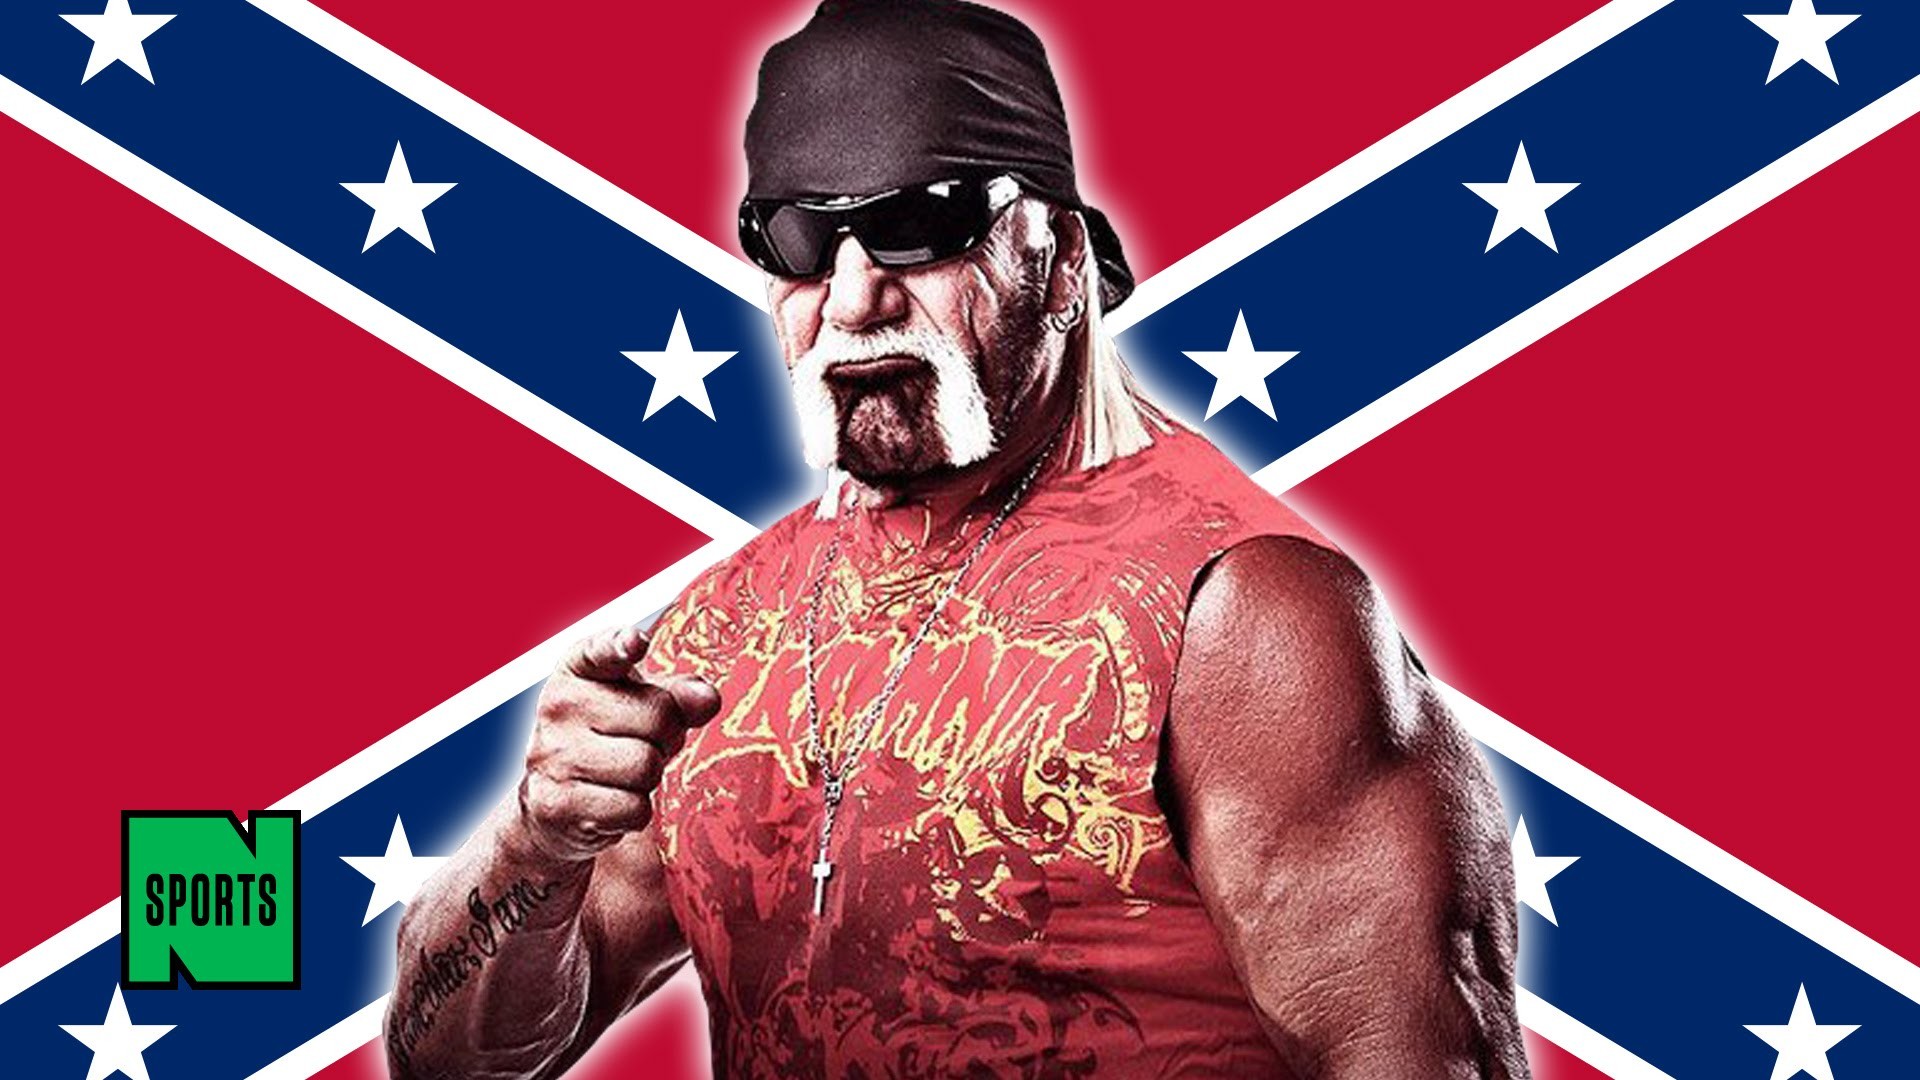 NEW Hulk Hogan TNA wallpaper  Kupy Wrestling Wallpapers